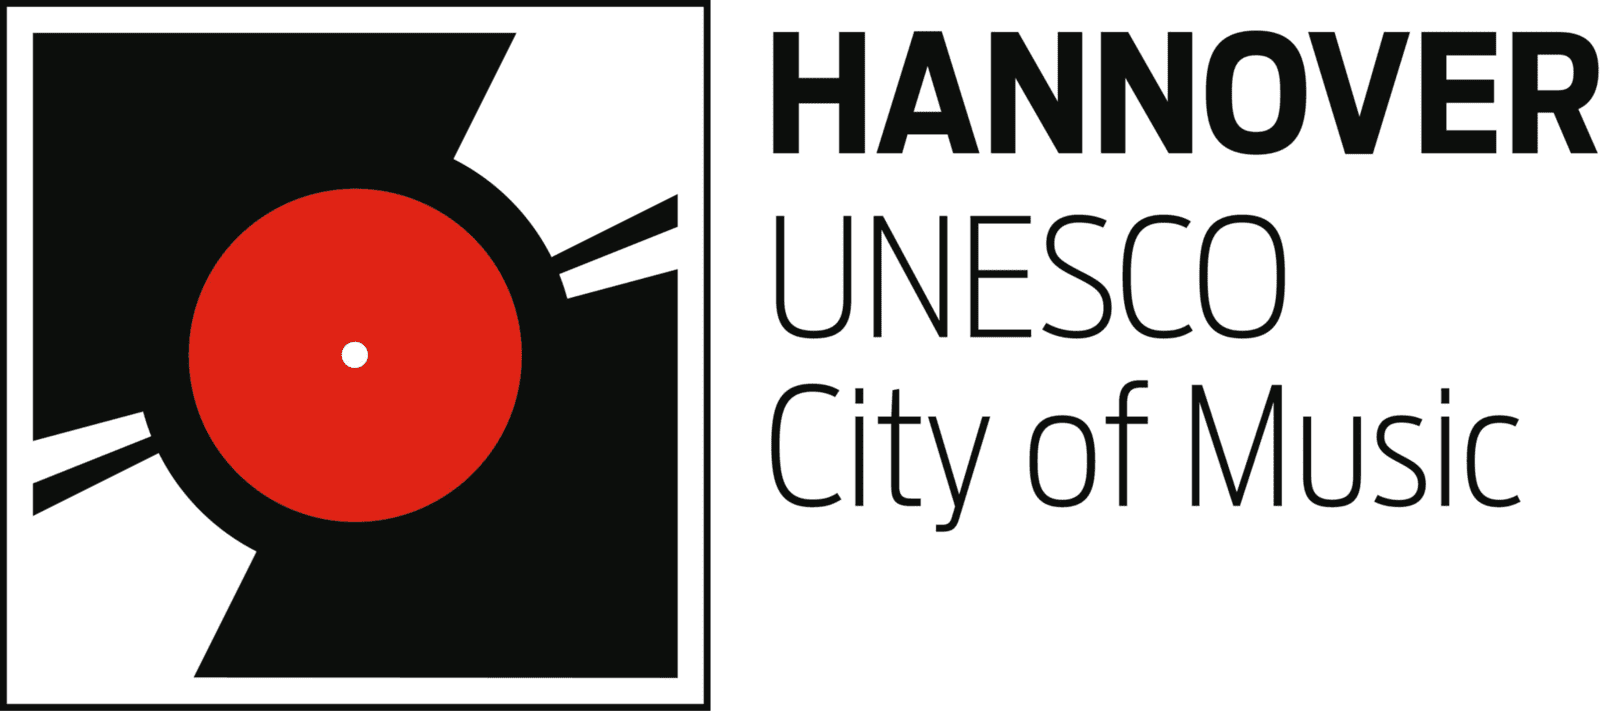 UNESCO City of Music: Basis-Logo